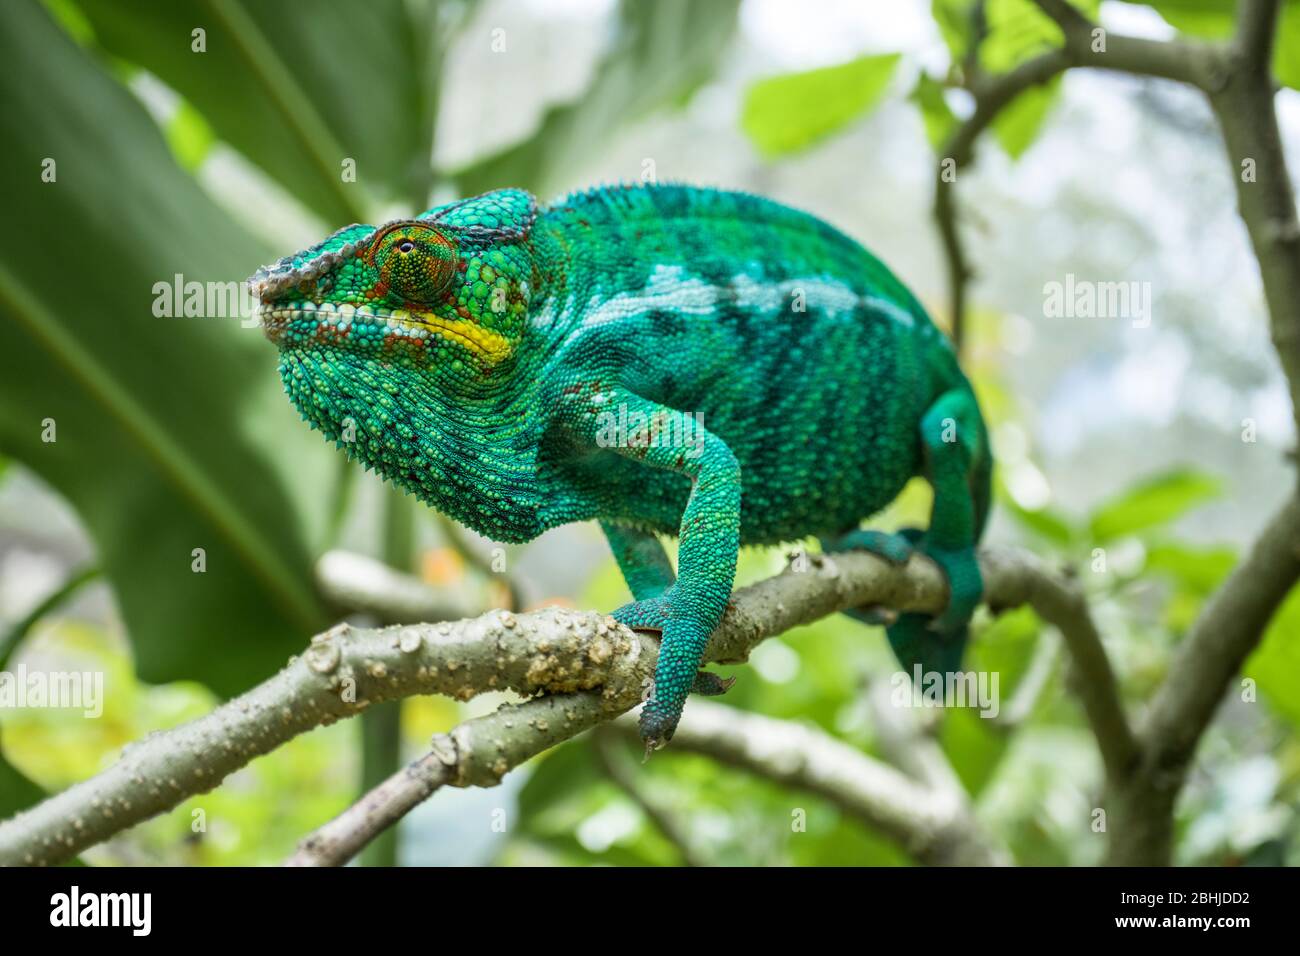 Panther chameleon of Madagascar Stock Photo